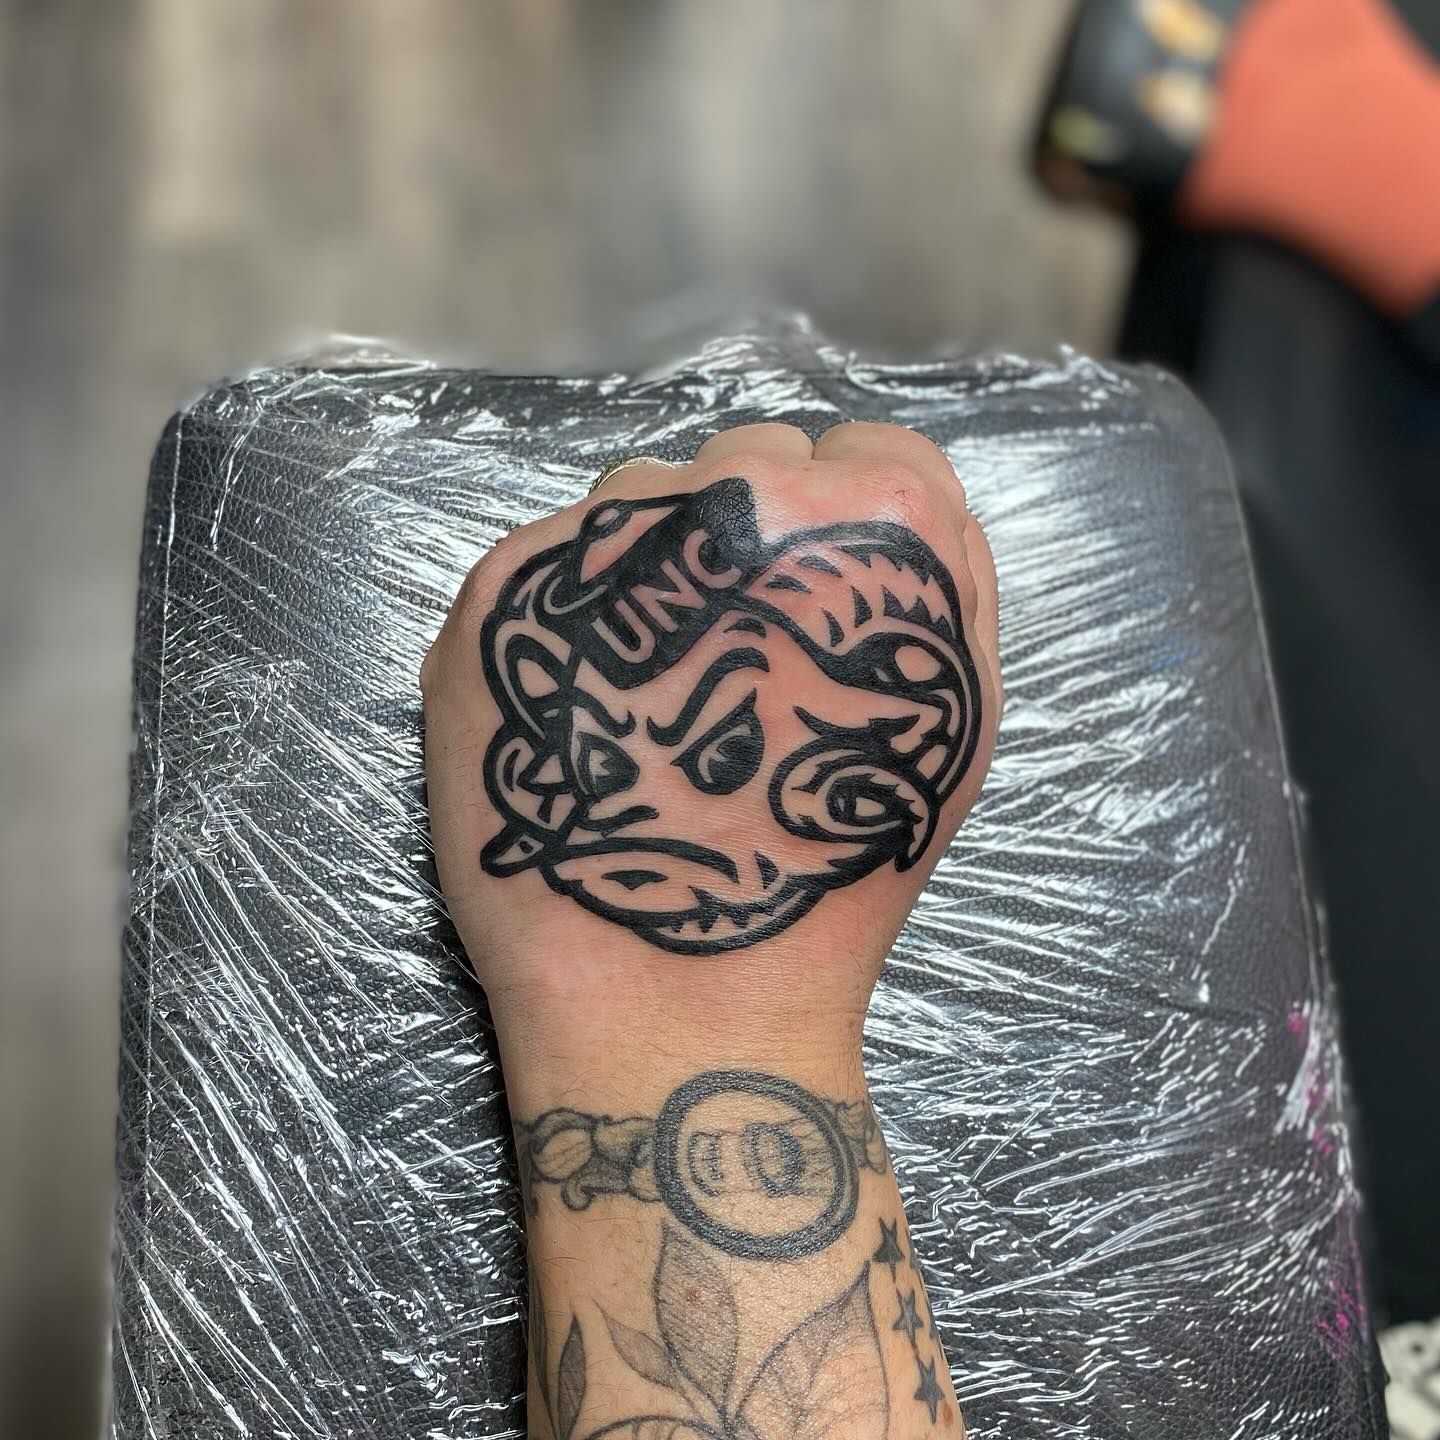 A Tattoo On The Hand - Burlington, NC - Inferno Ink Tattoo